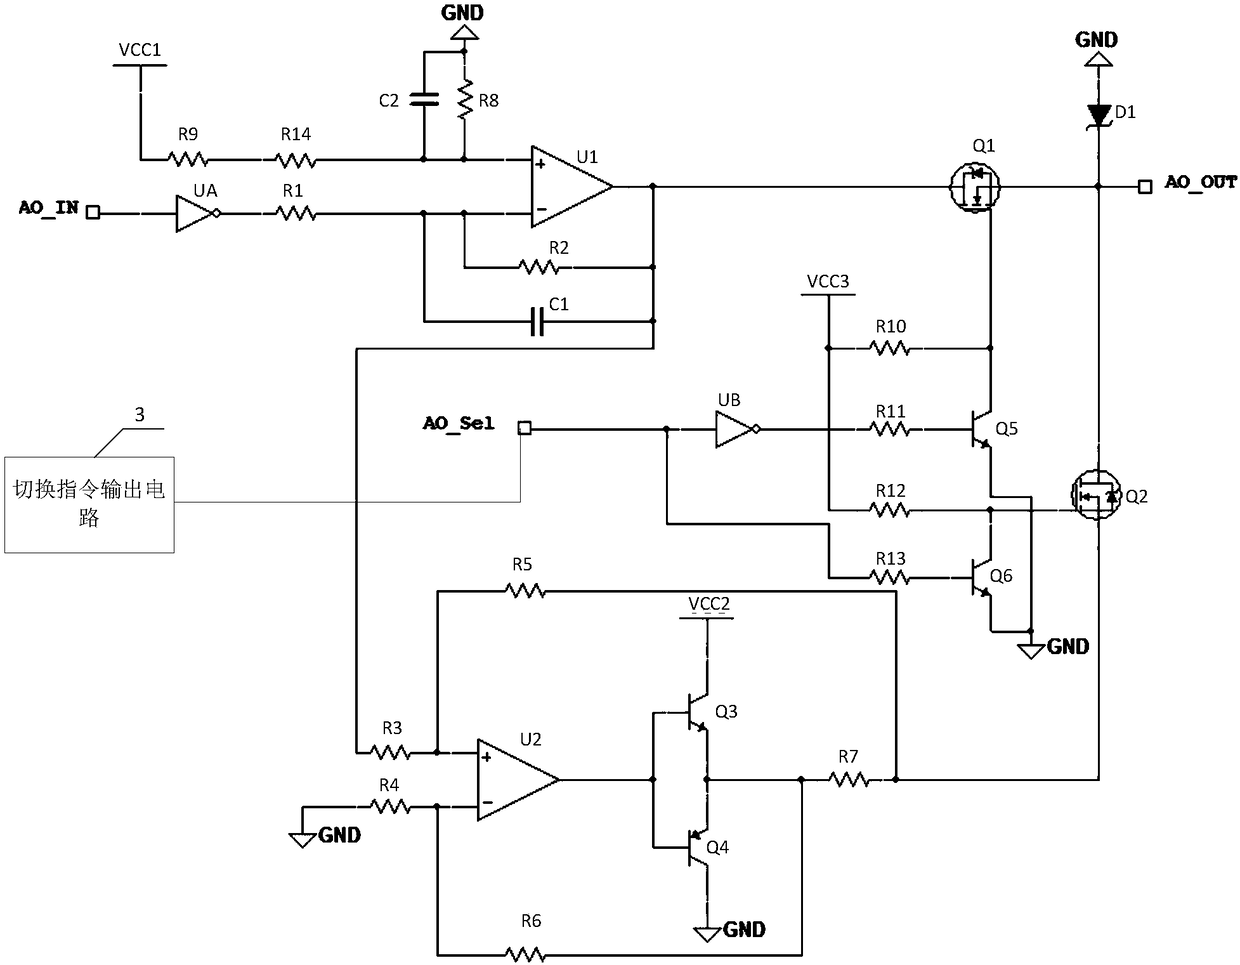 Analog quantity signal output circuit